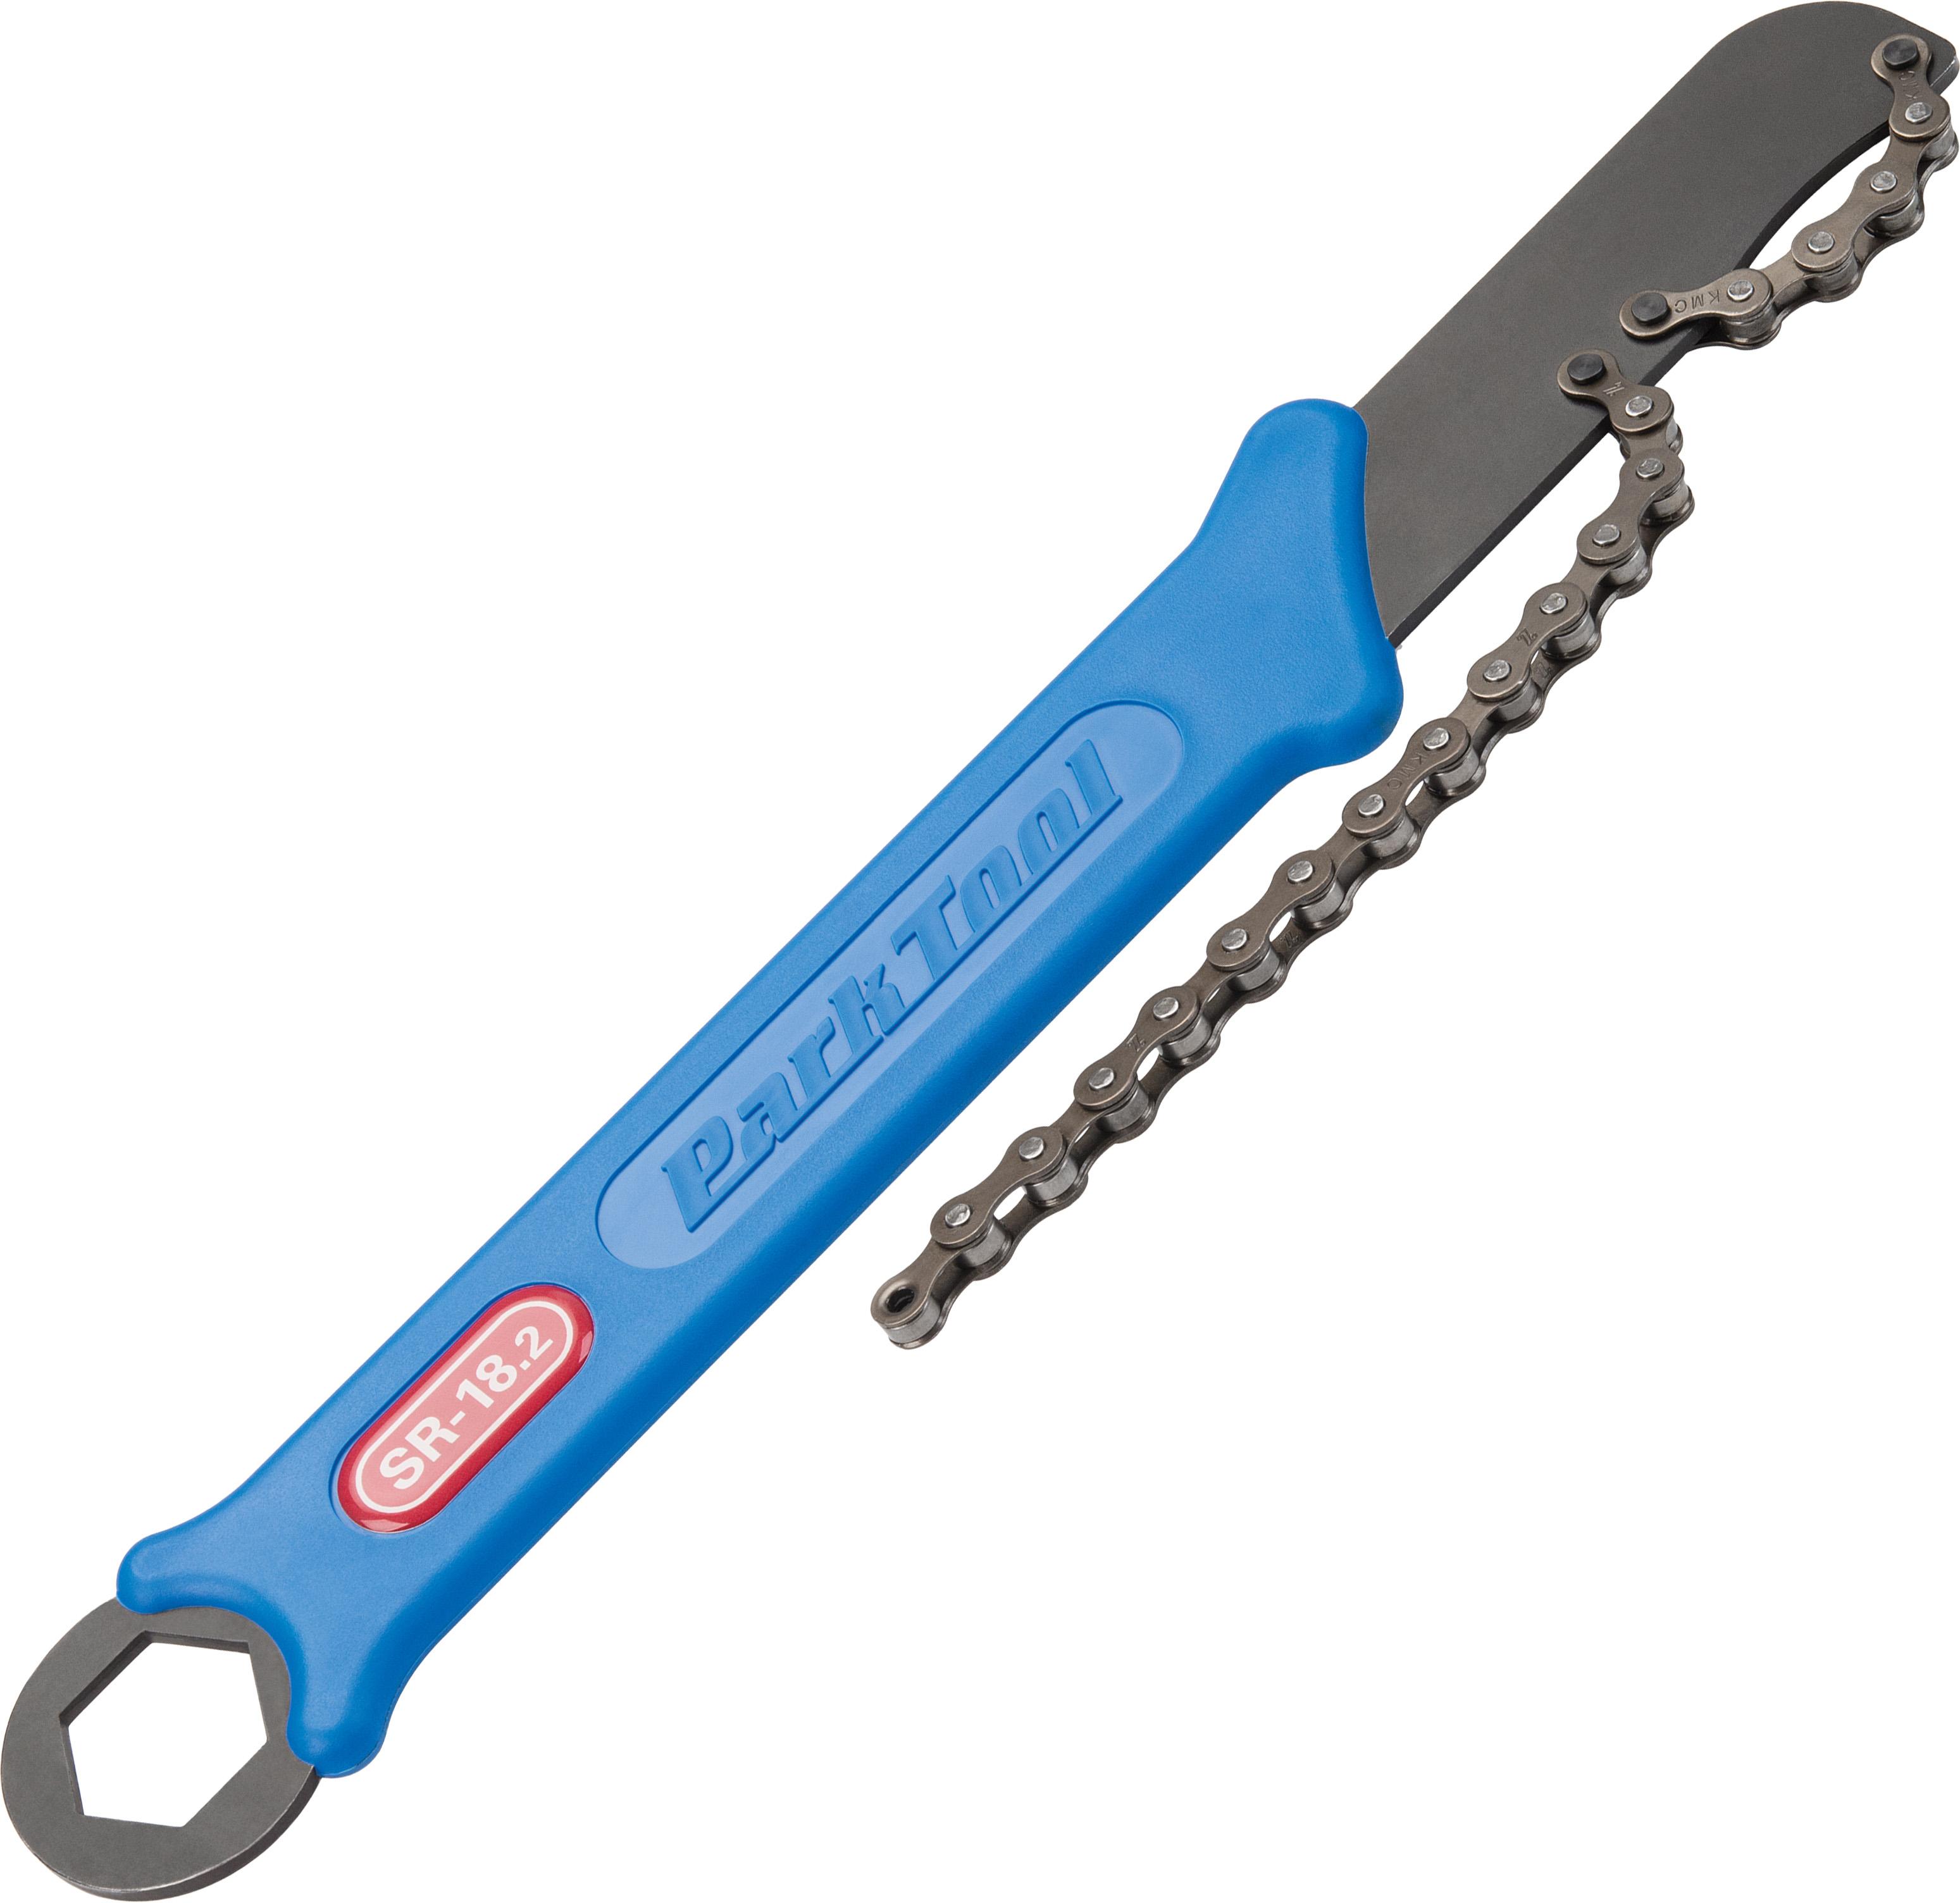 Park Tool Sprocket Remover - Chain Whip (sr-18.2)  Blue